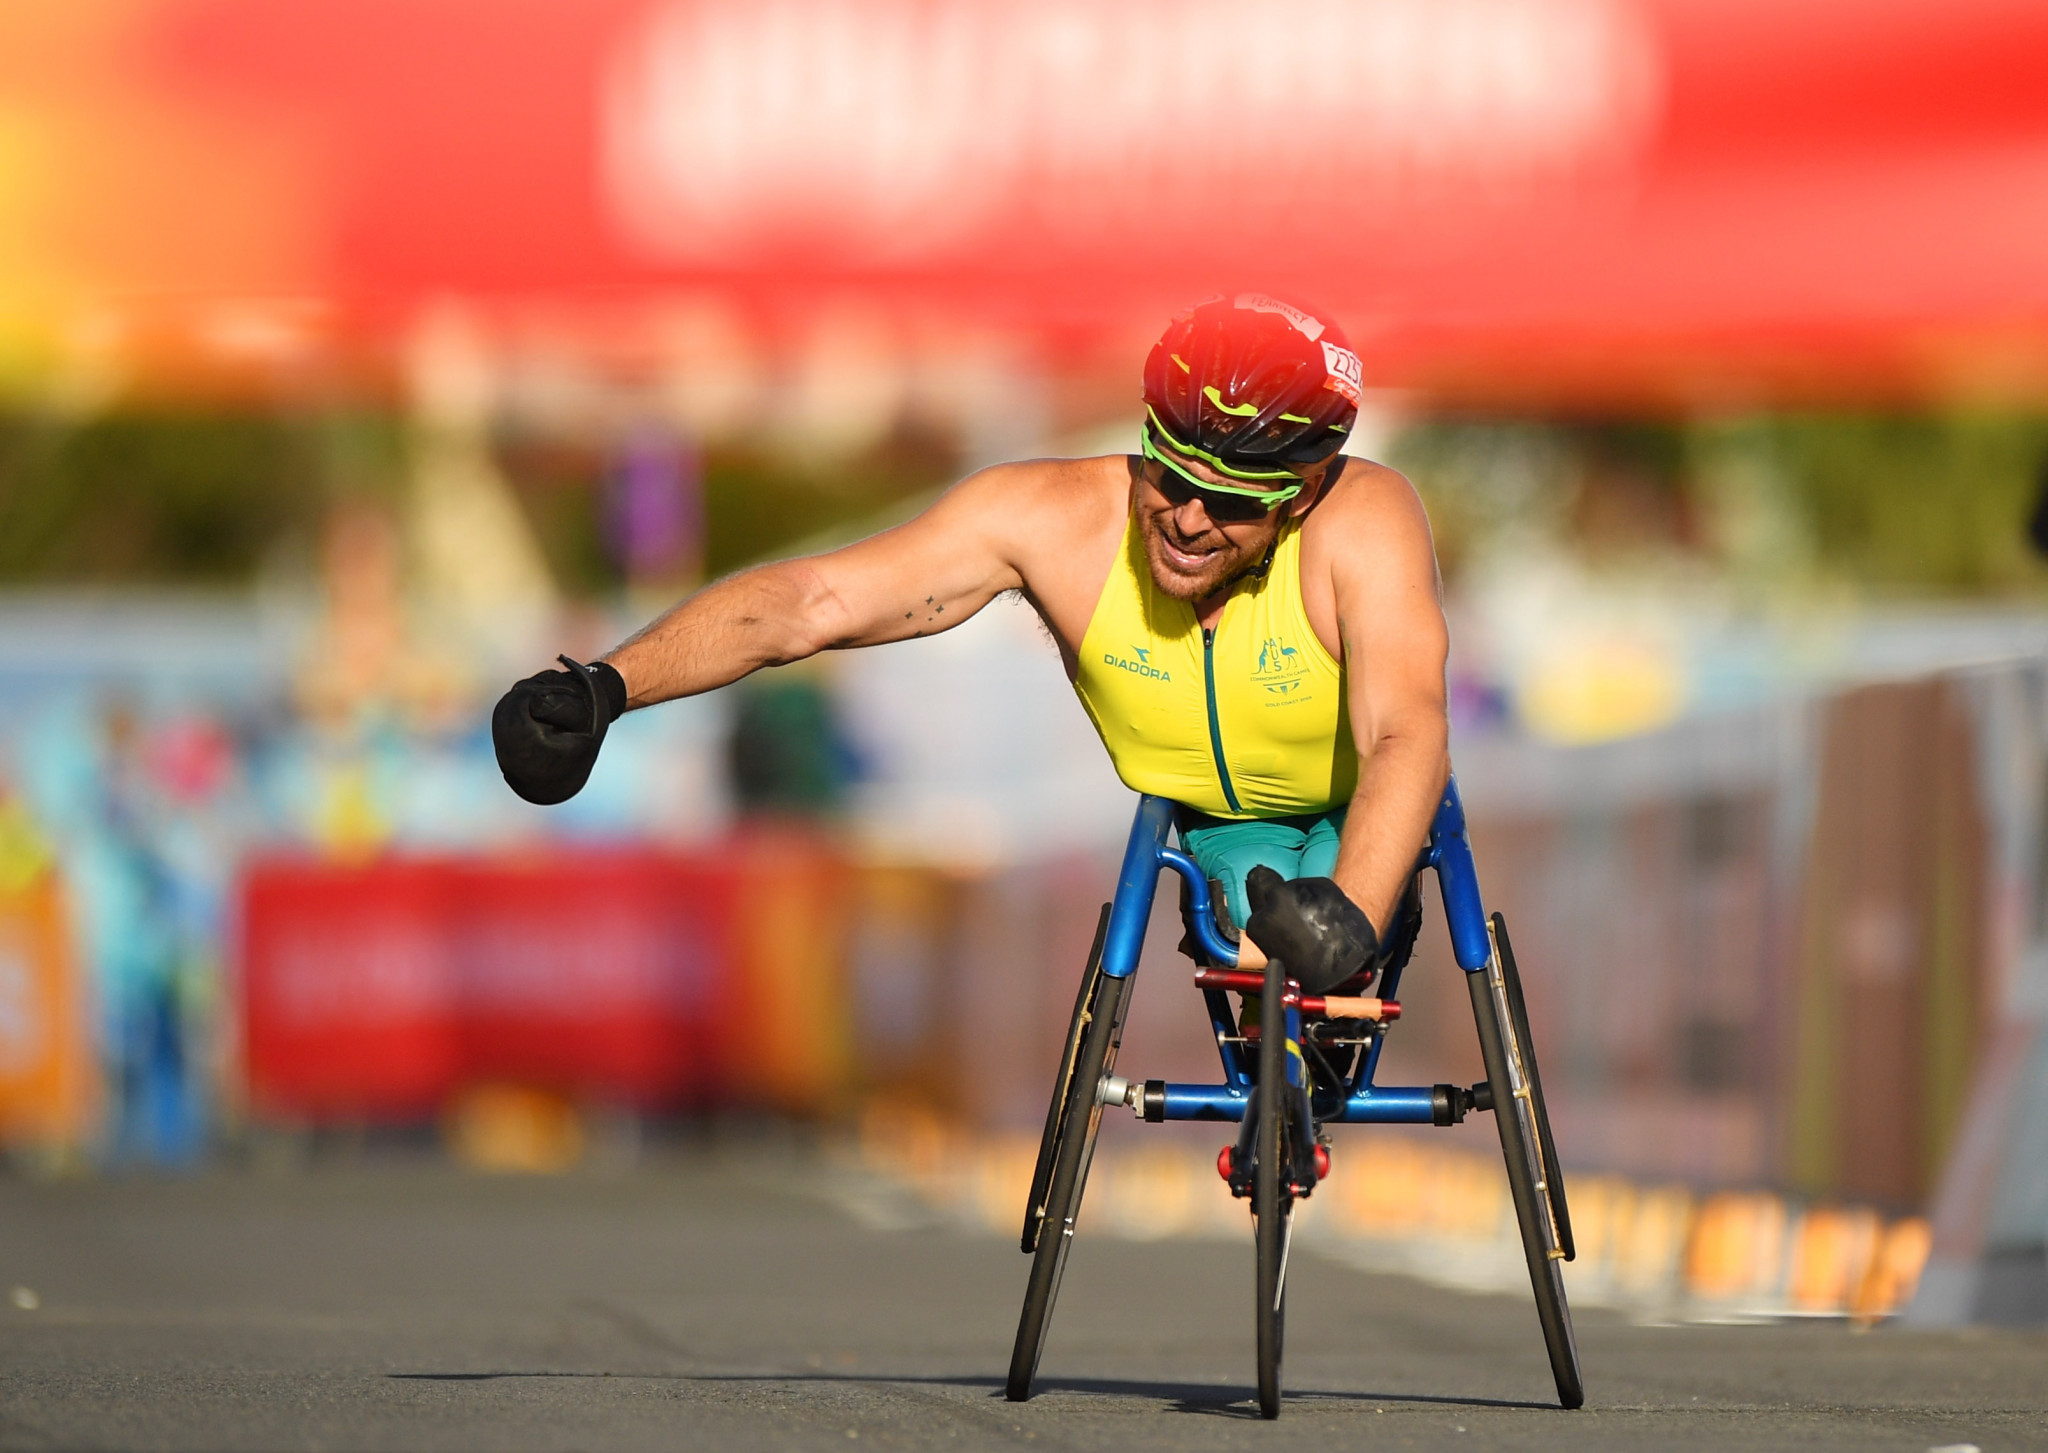 Fearnley becomes first Para-athlete to win prestigious Australian award